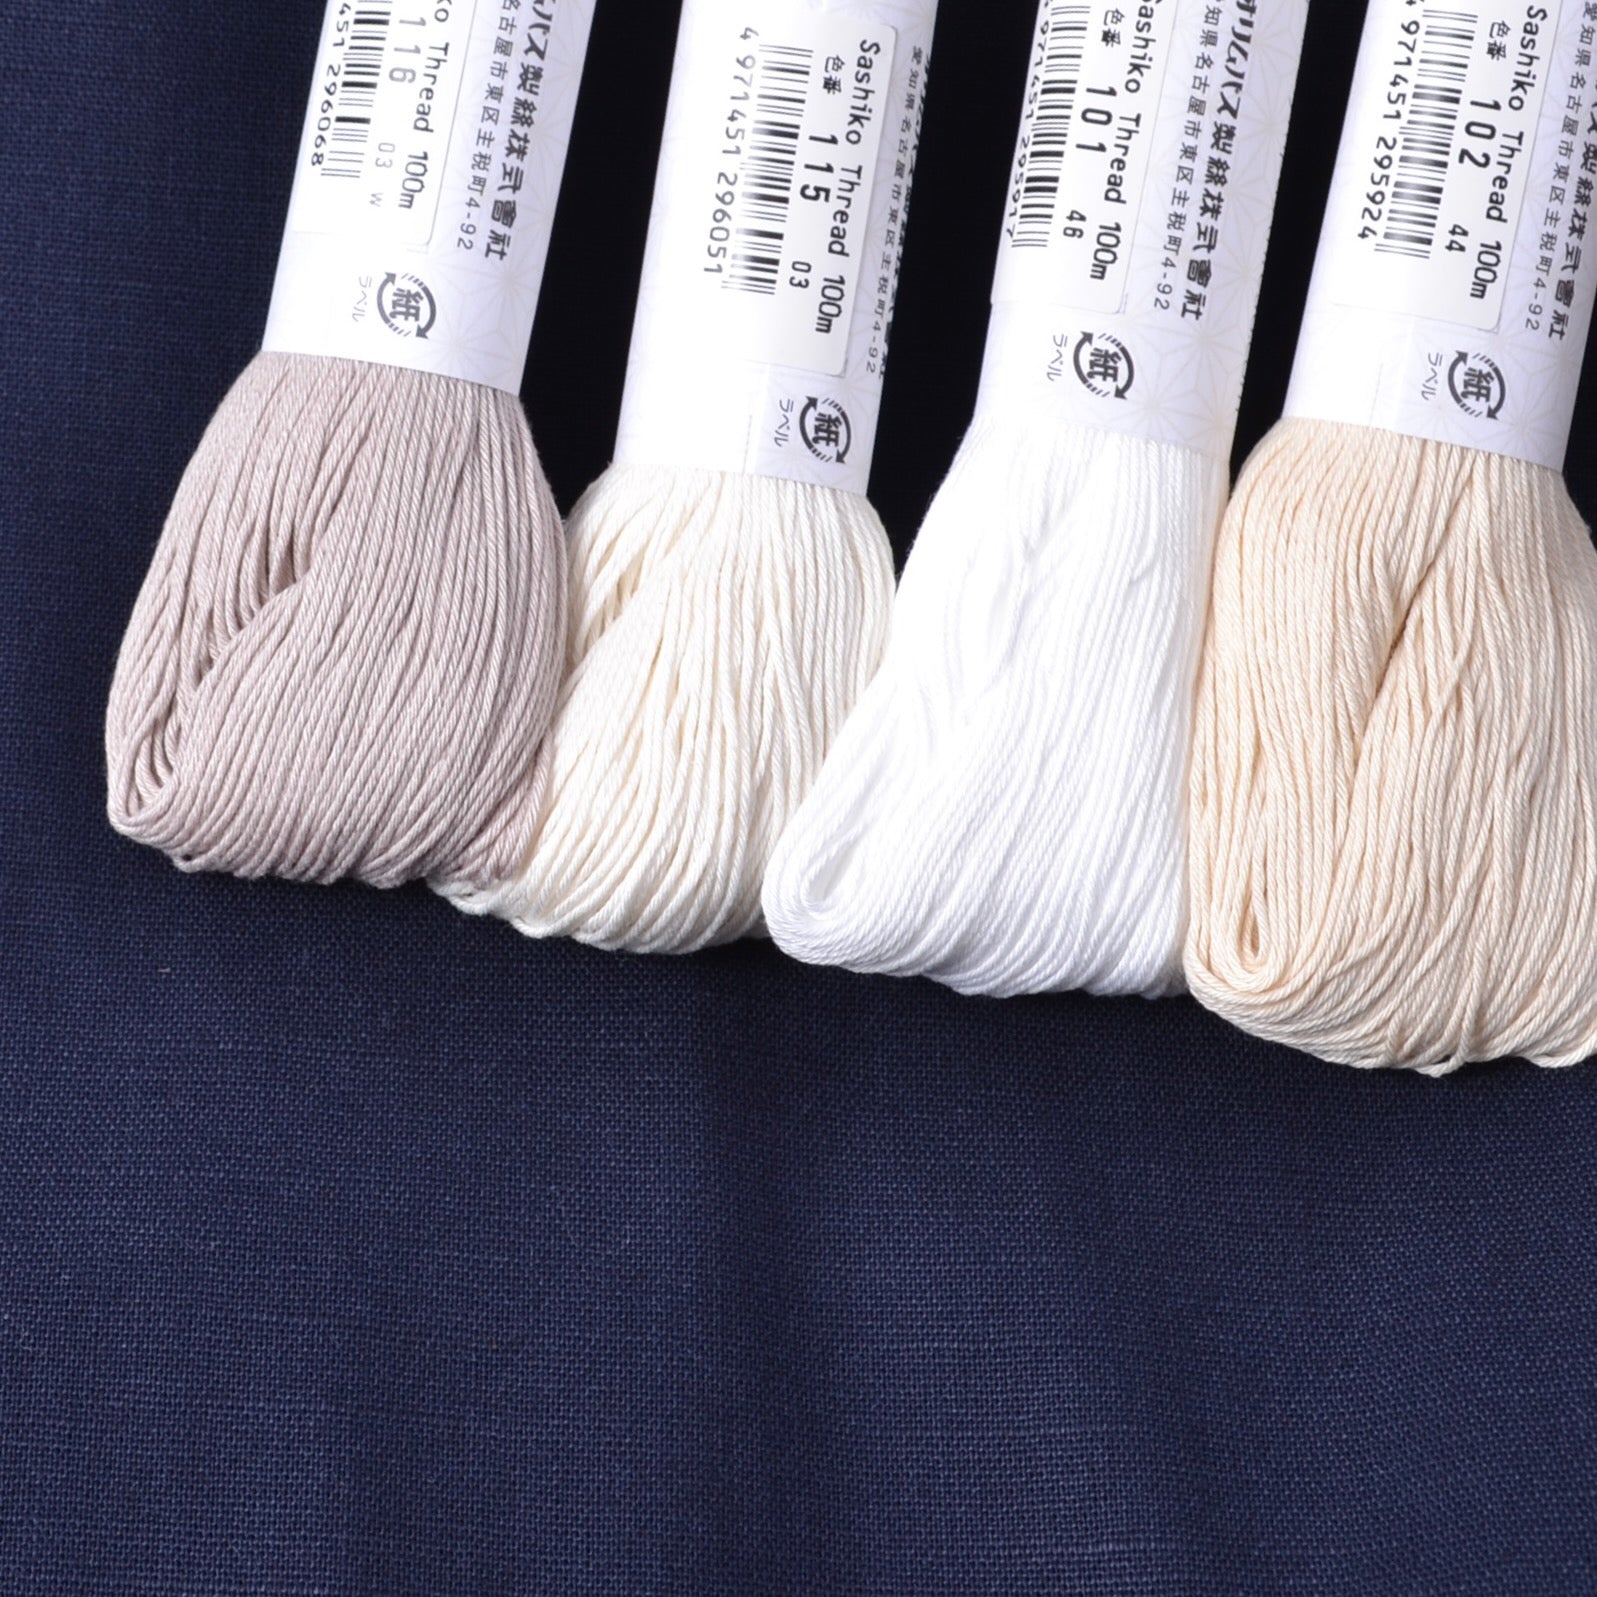 4 white sashiko threads compared on navy blue fabric